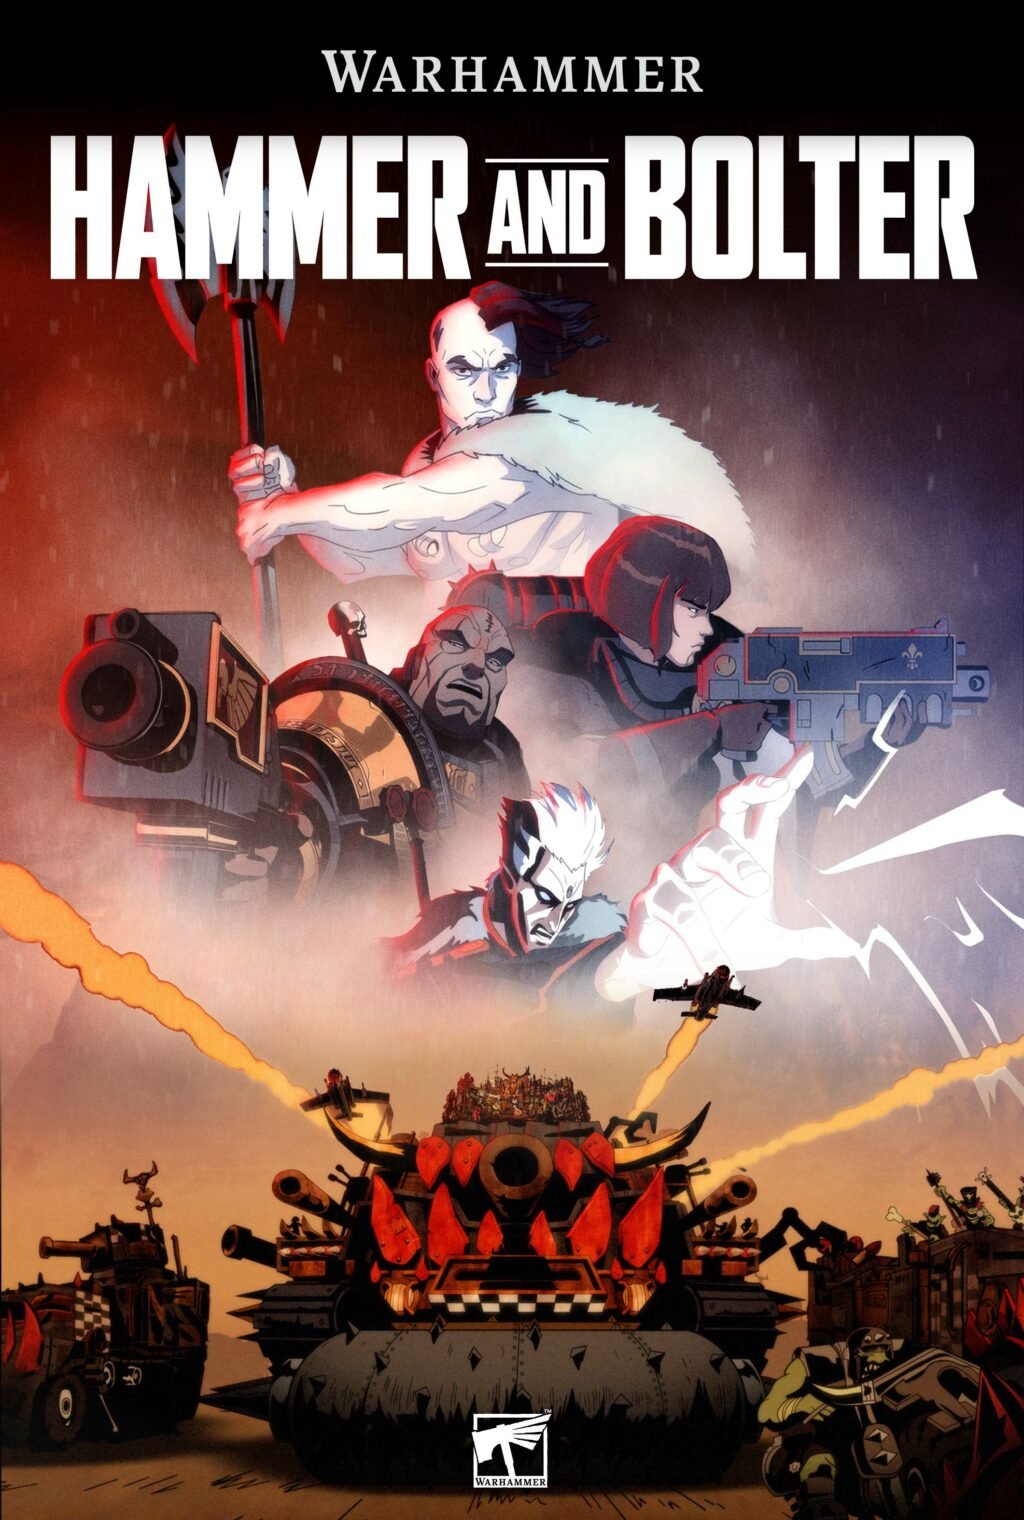 Massive Warhammer Animation News – Coming This Saturday - Warhammer